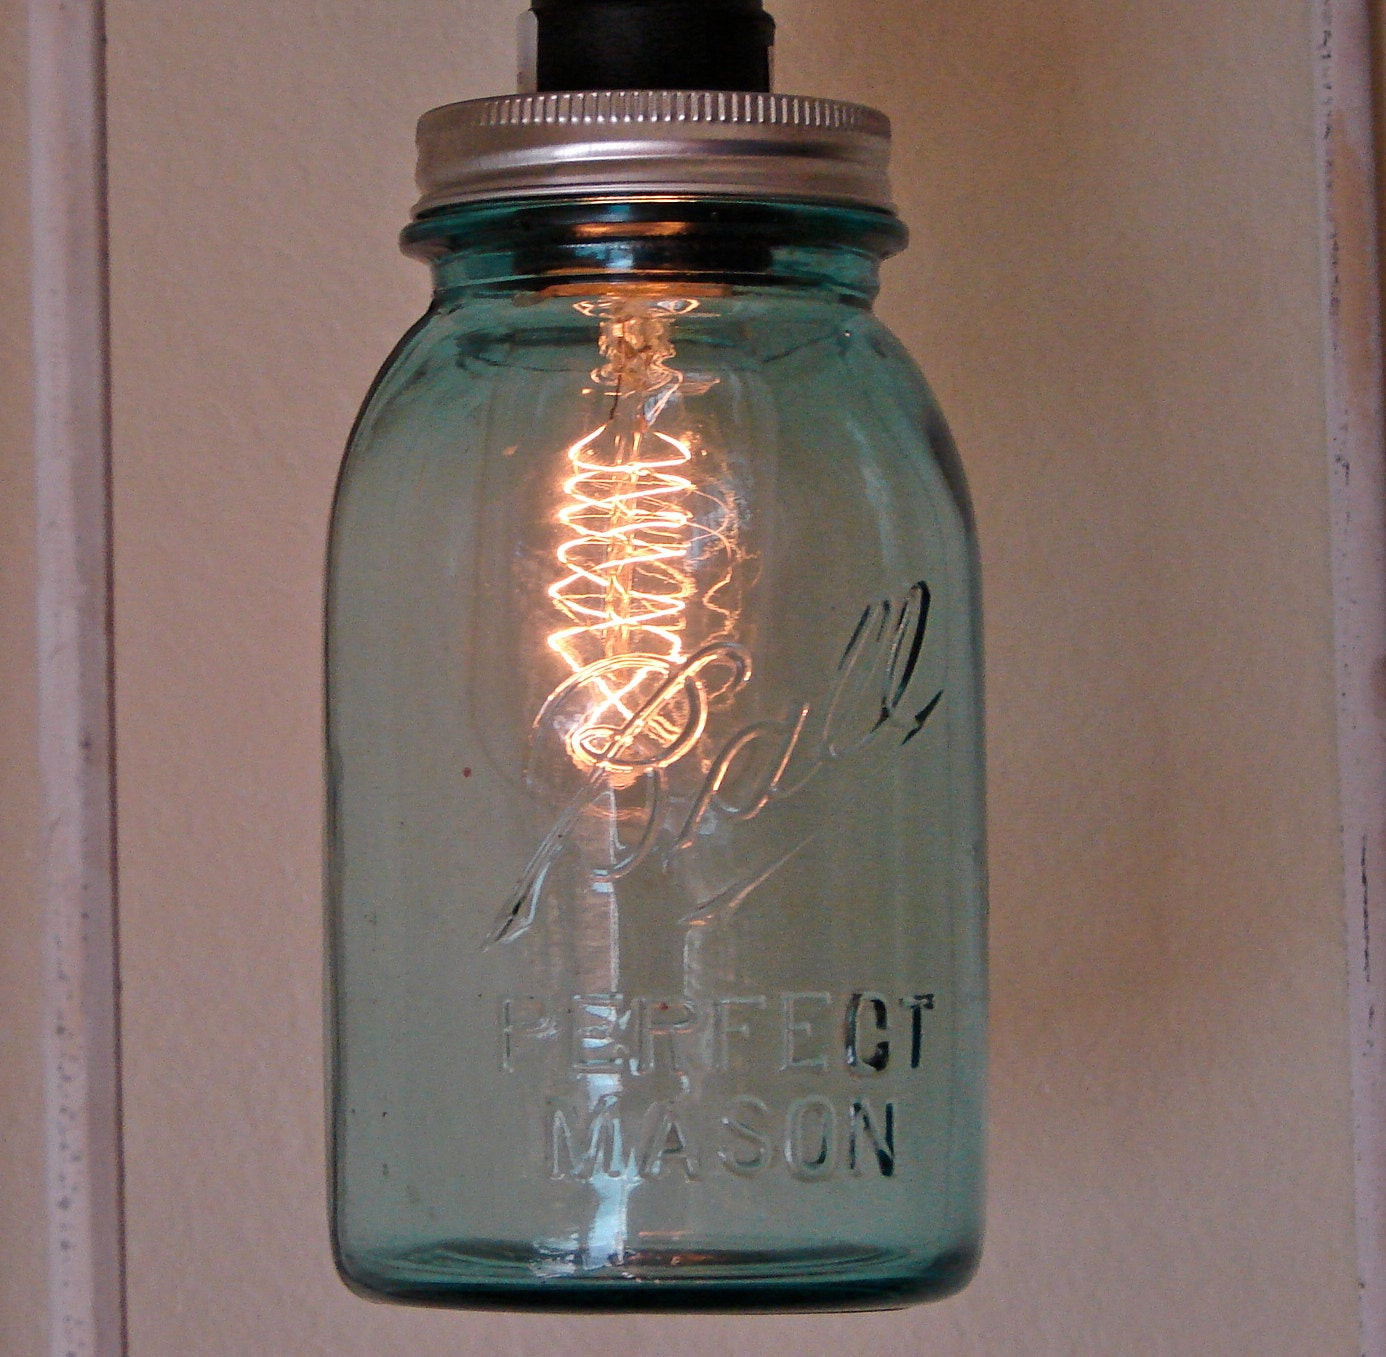 Best ideas about Mason Jar Pendant Light DIY
. Save or Pin Mason Jar Pendant Lamp Kit DIY Standard Size Now.